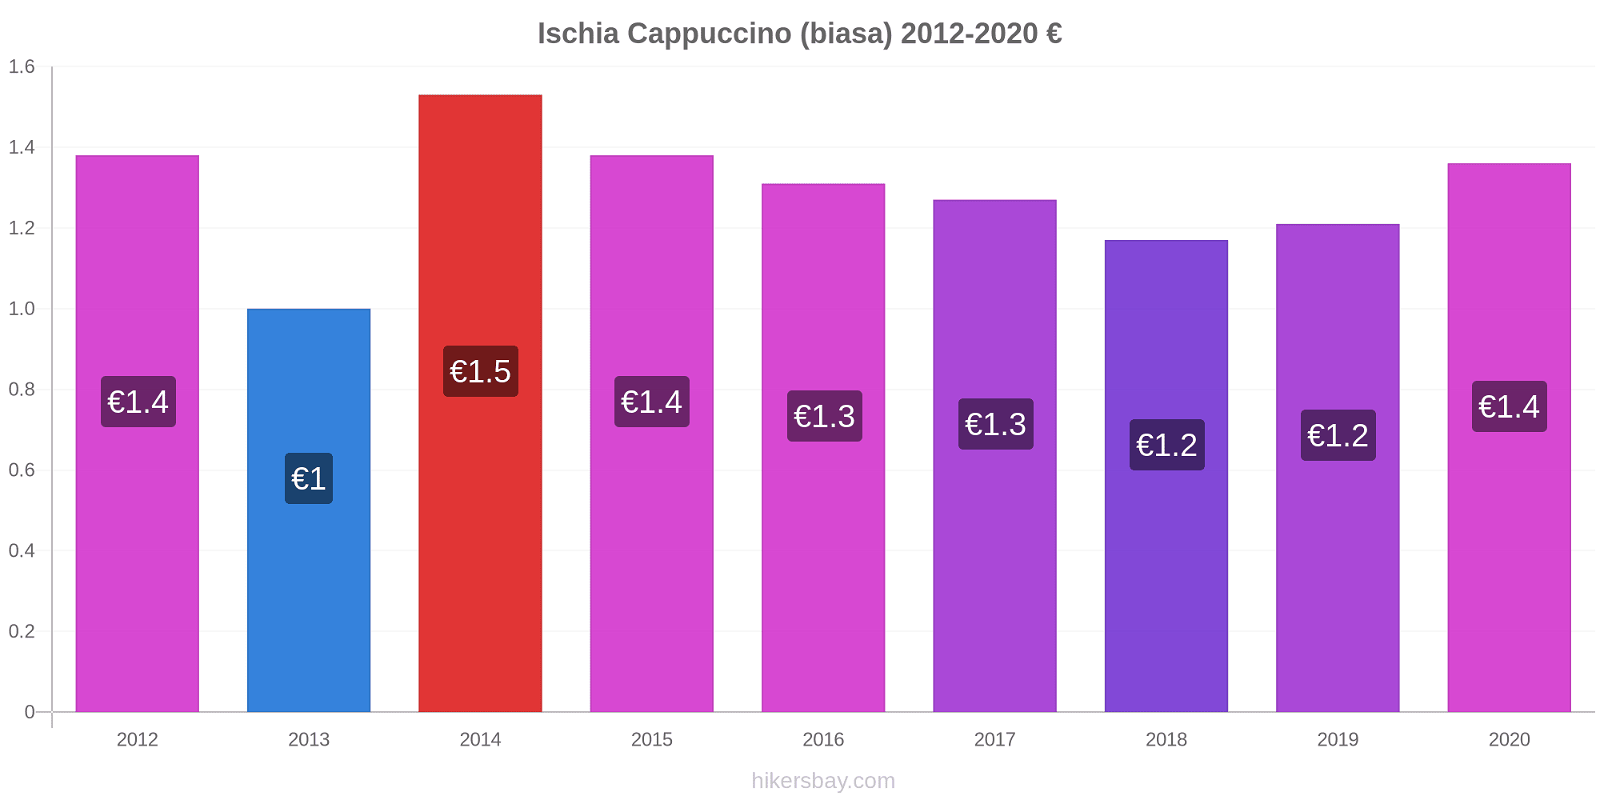 Ischia perubahan harga Cappuccino (biasa) hikersbay.com